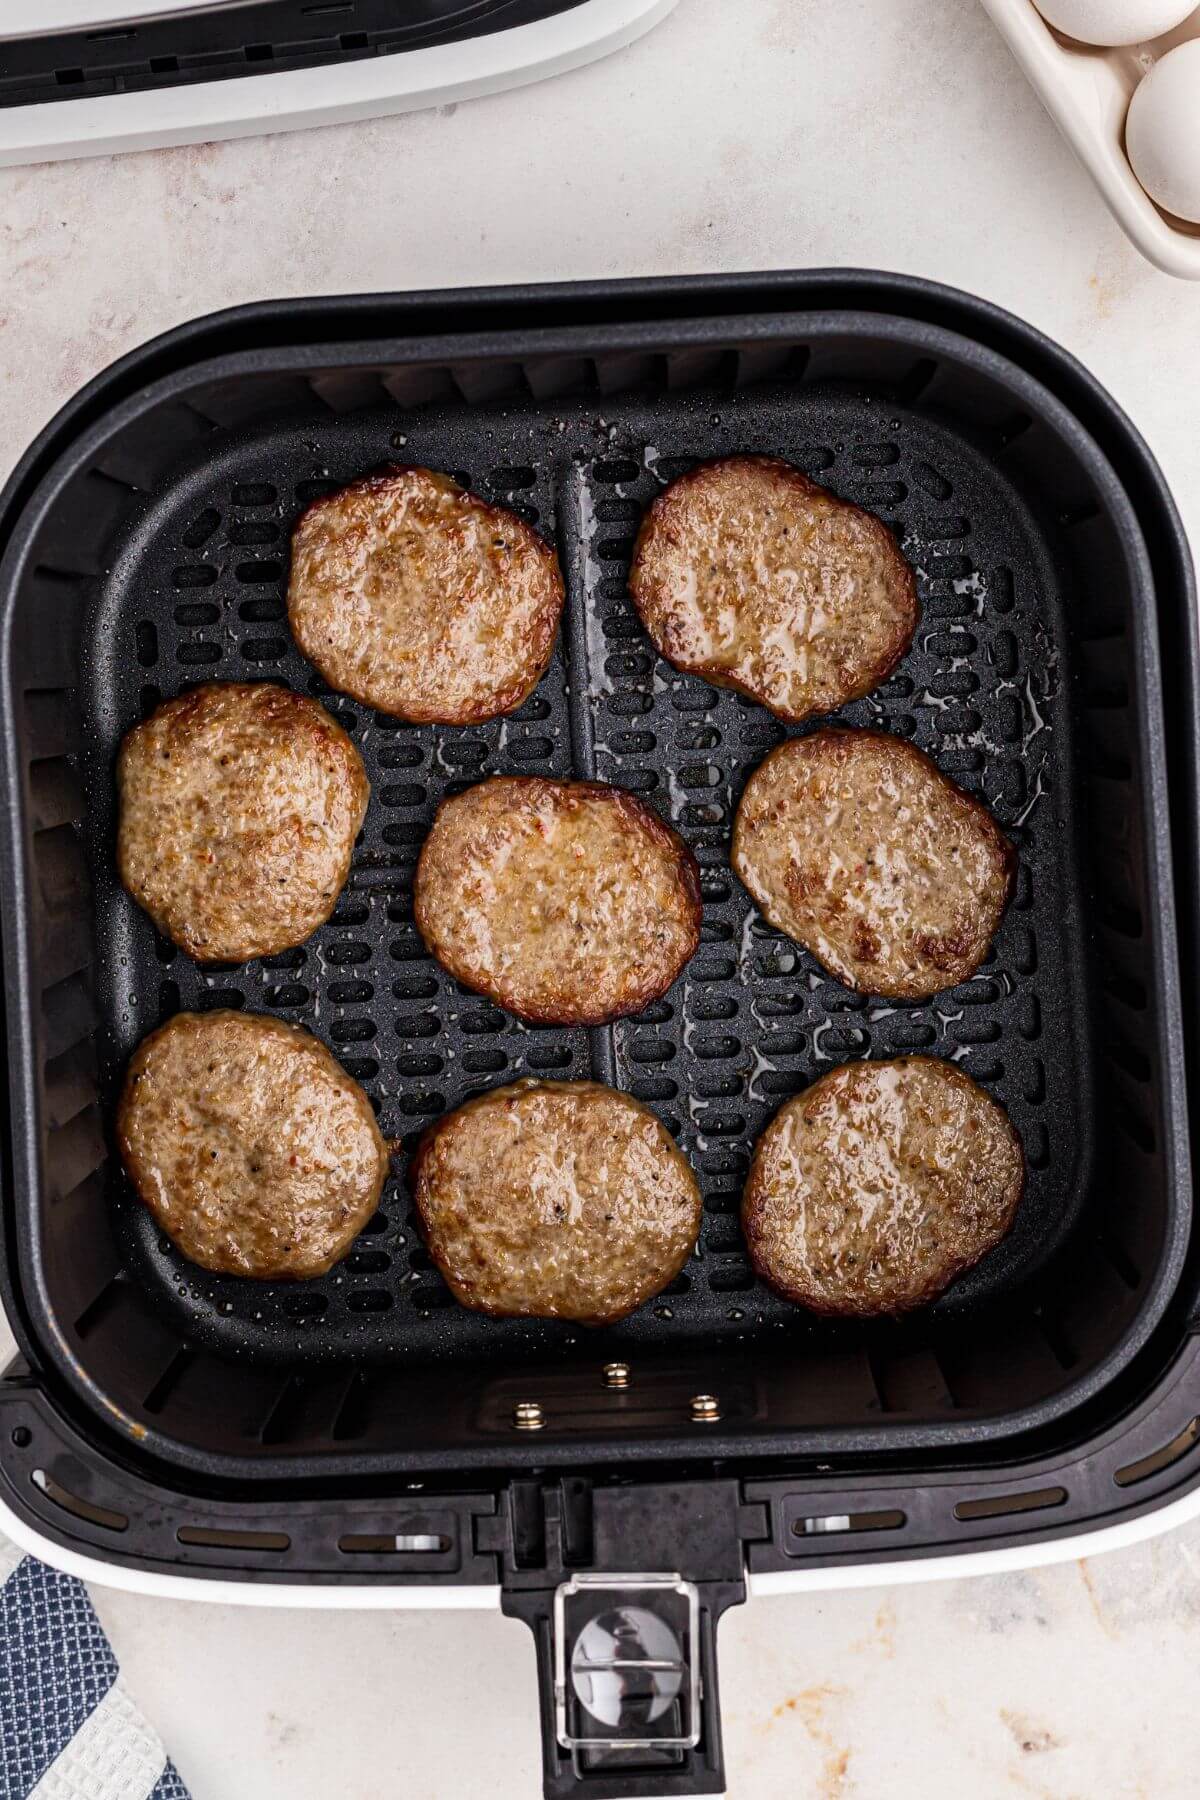 Juicy brown sausage patties in the air fryer basket after being cooked. 